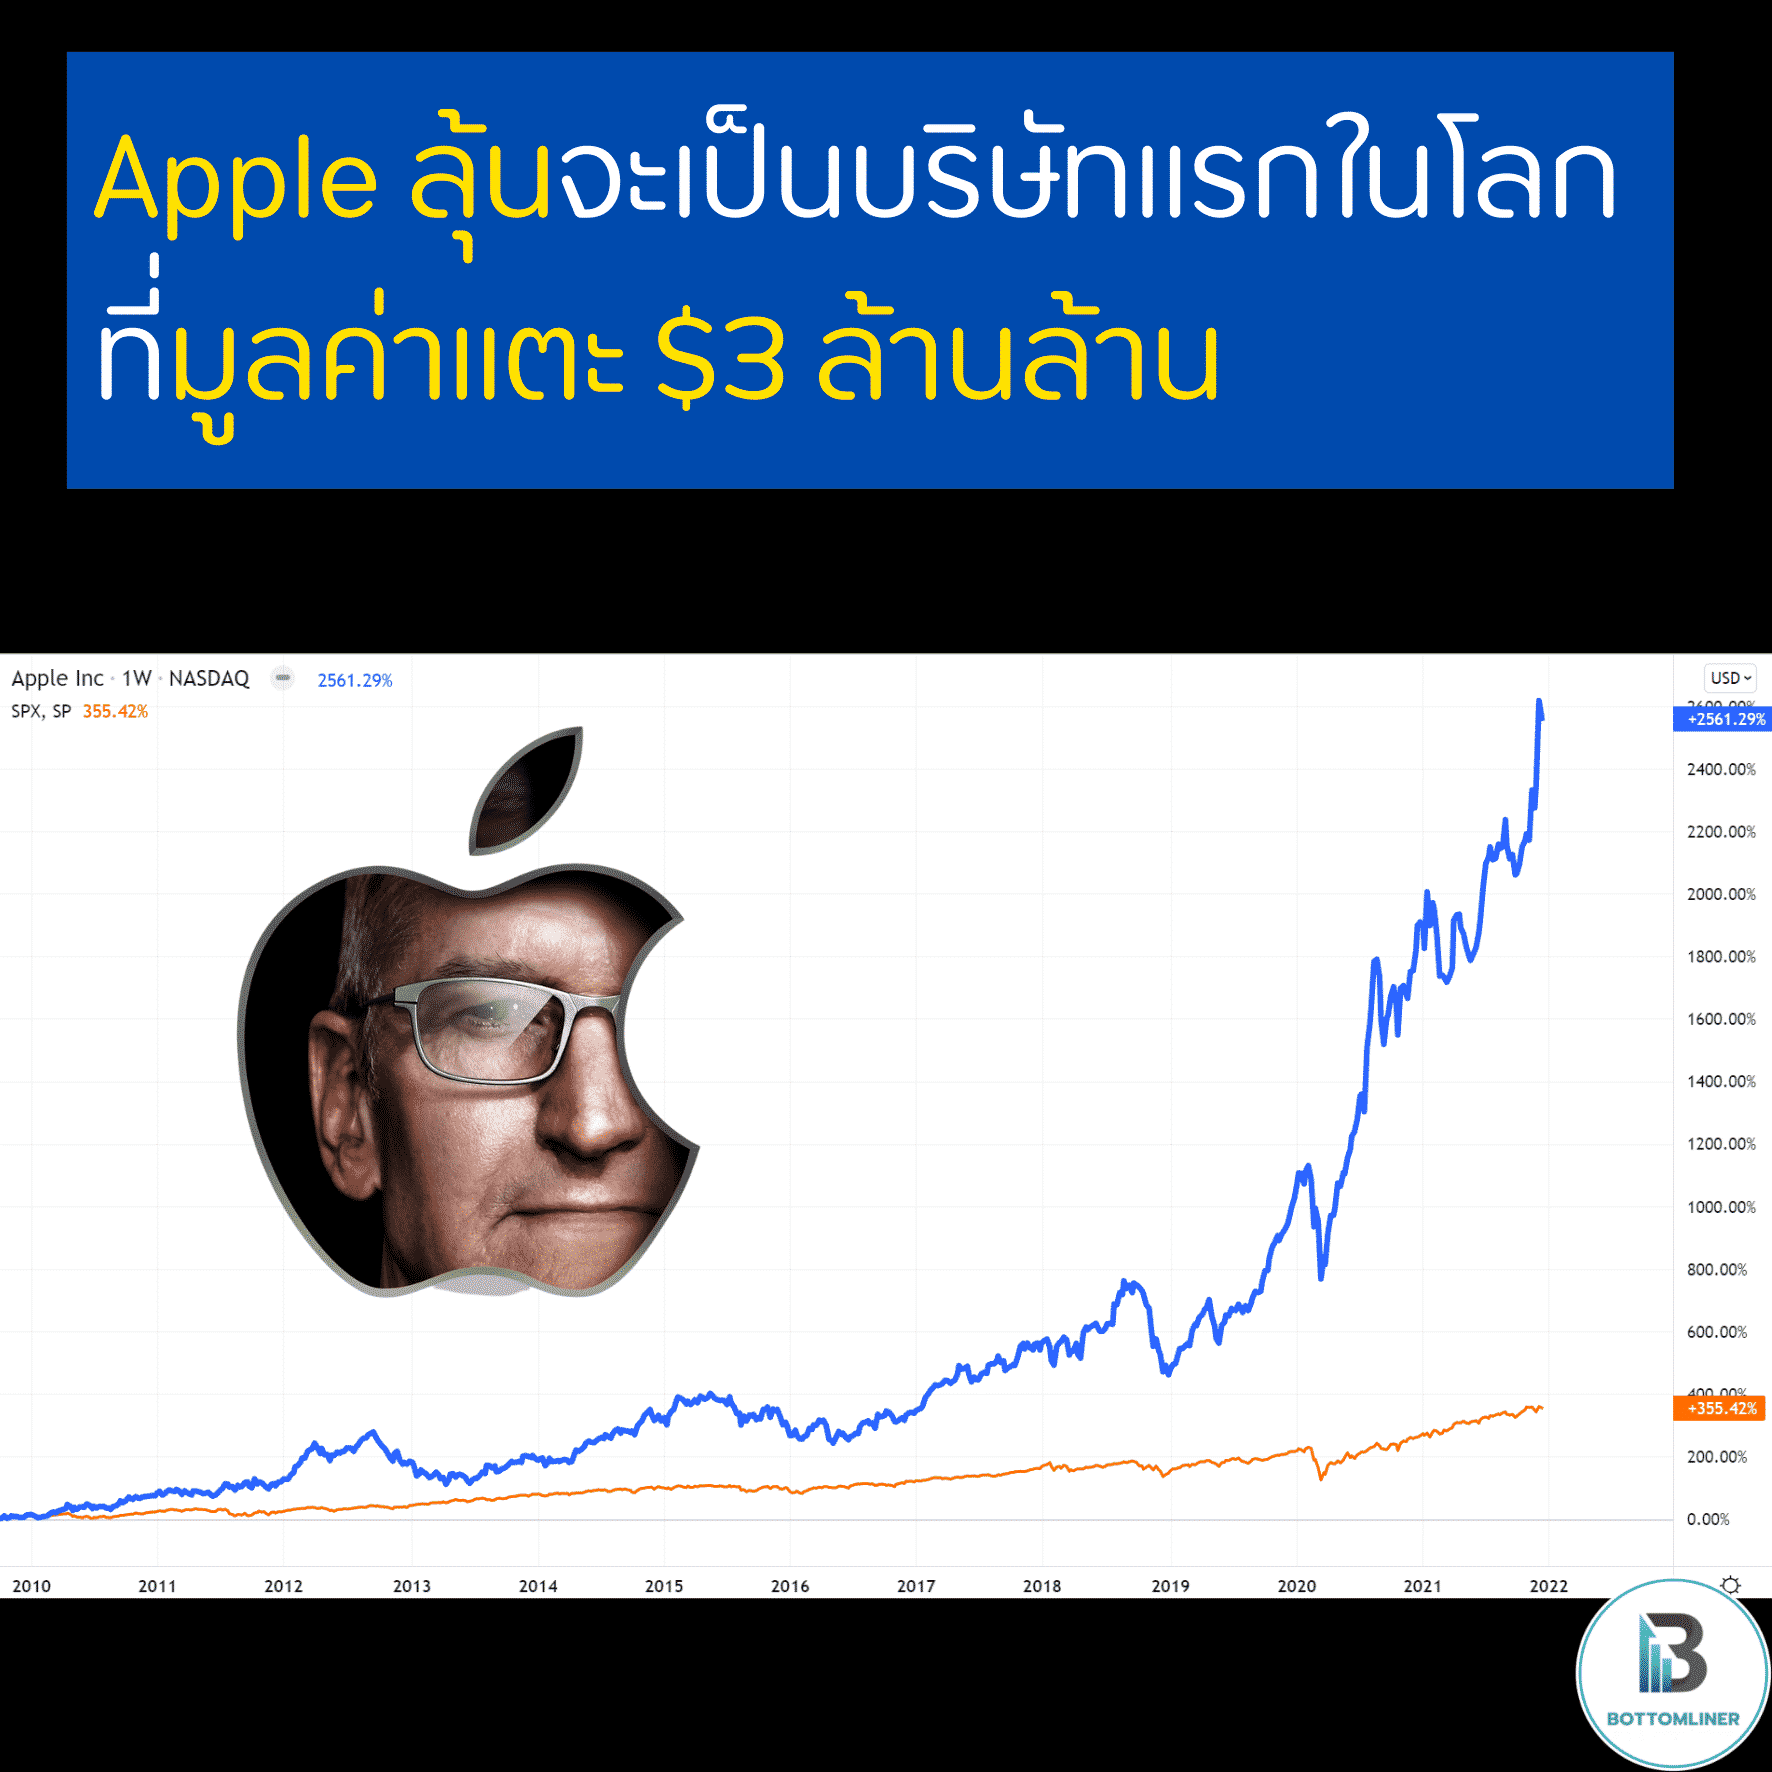 Apple ลุ้นจะเป็นบริษัทแรกในโลกที่มูลค่าแตะ $3 ล้านล้าน